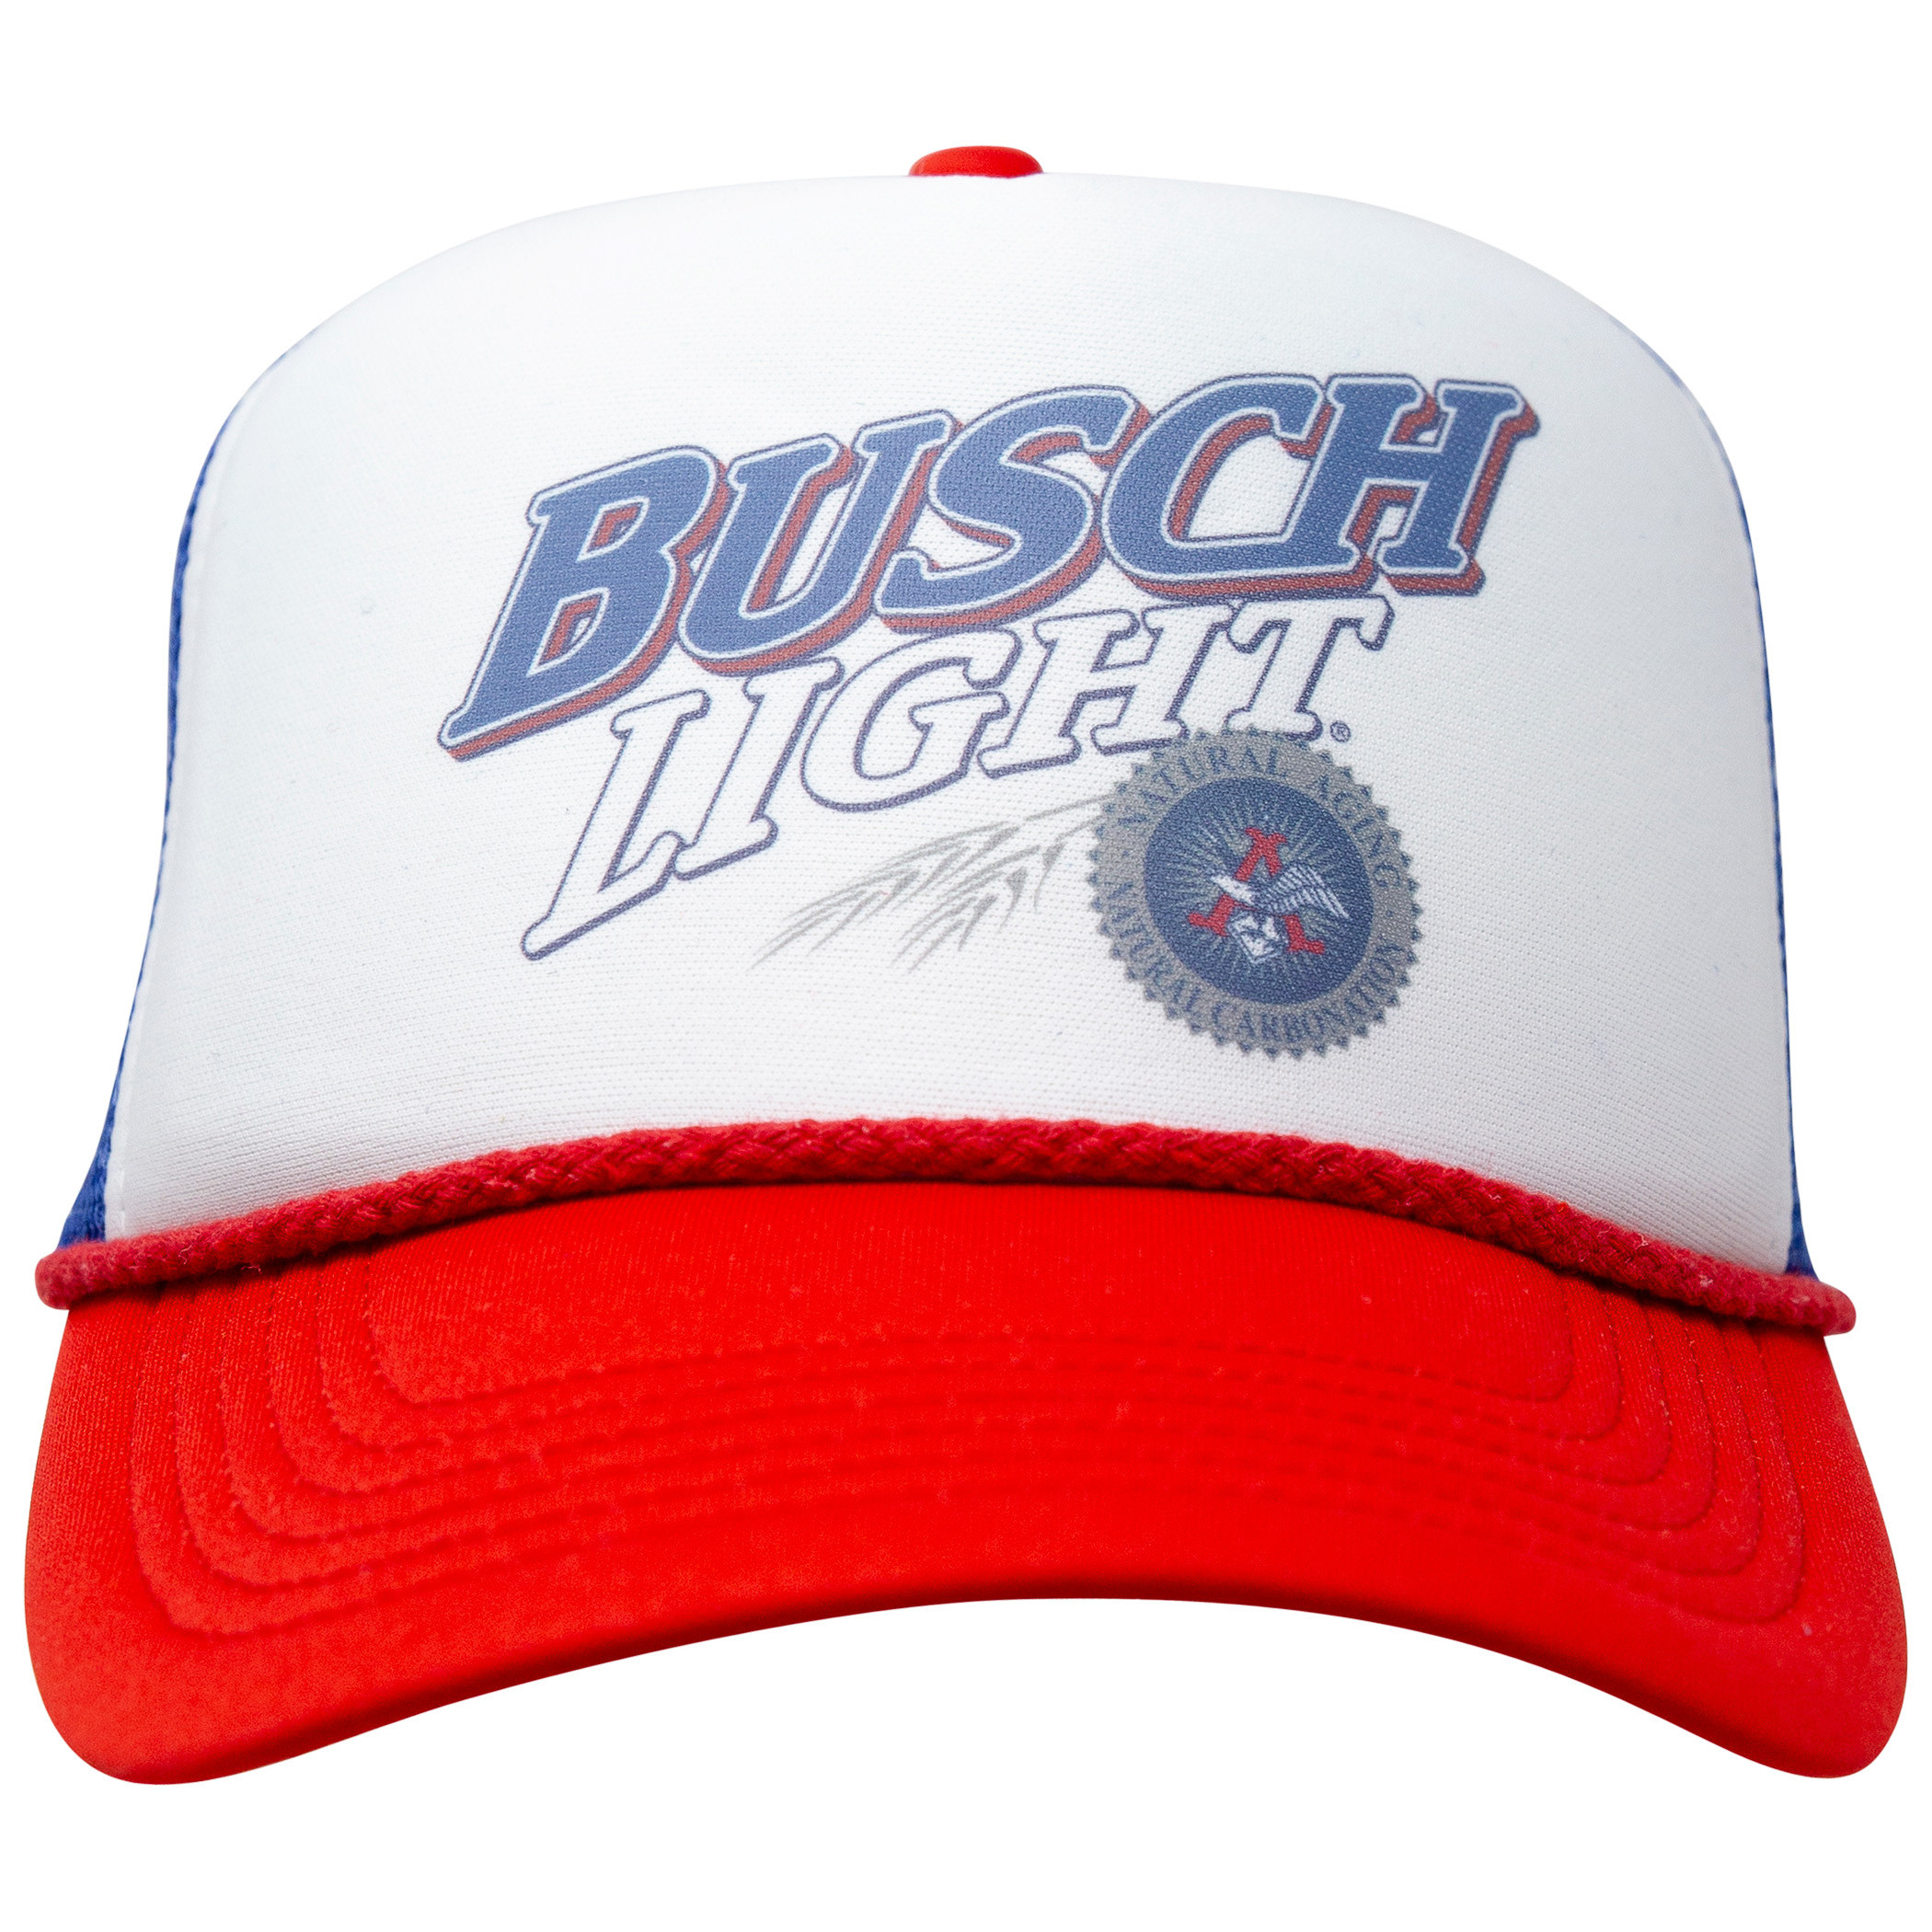 Busch Light Beer Logo Red  White  and Blue Adjustable Snapback Mesh Trucker Hat